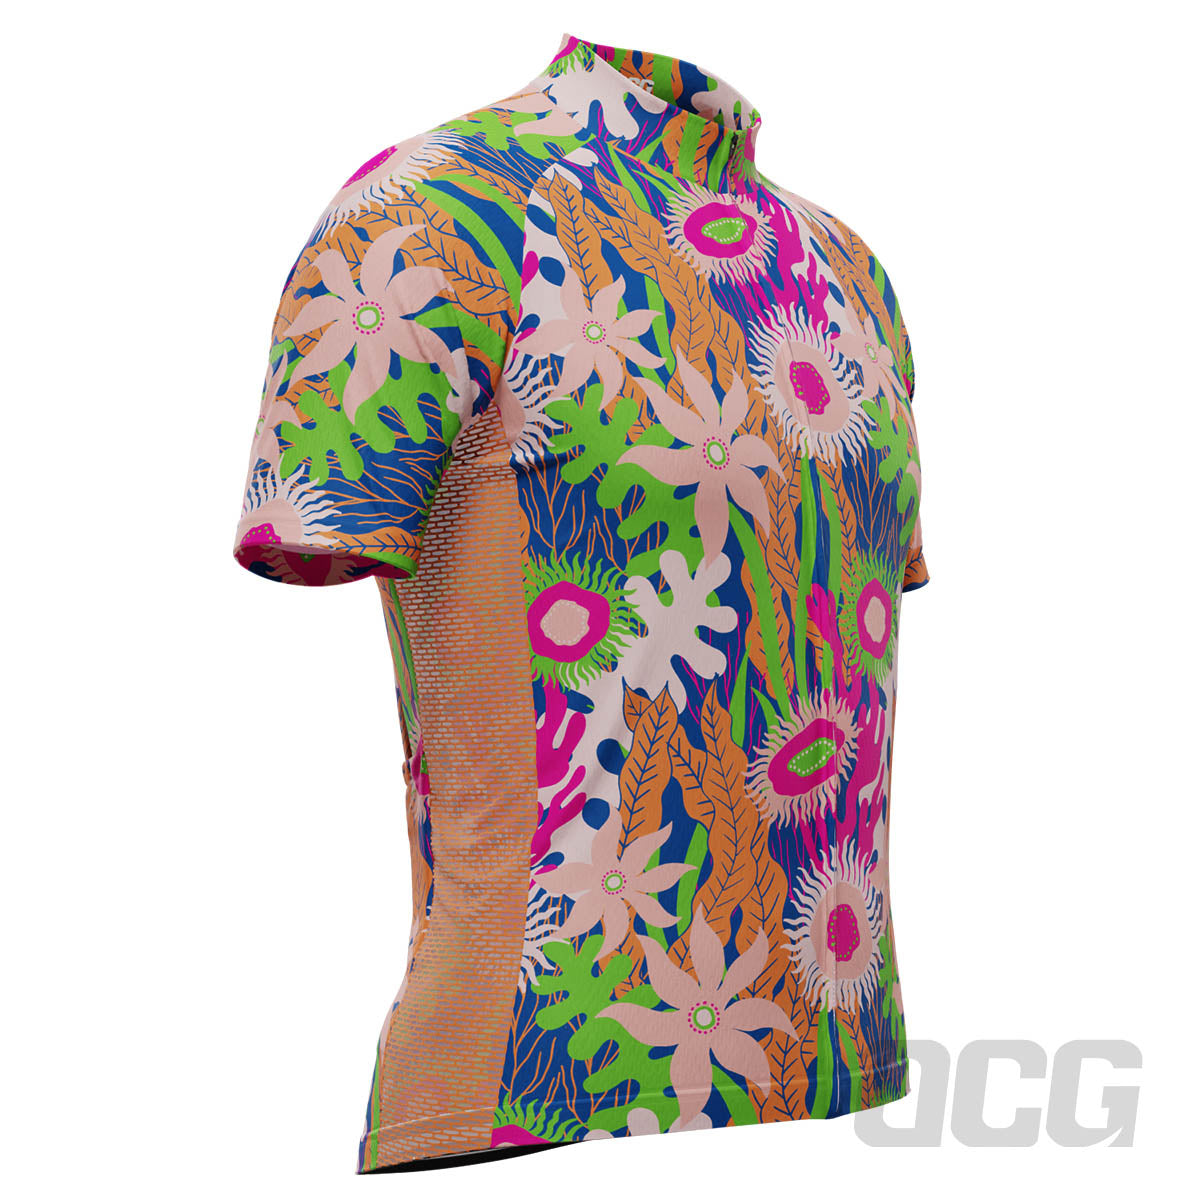 Men's Aquatic Plantlife Short Sleeve Cycling Jersey